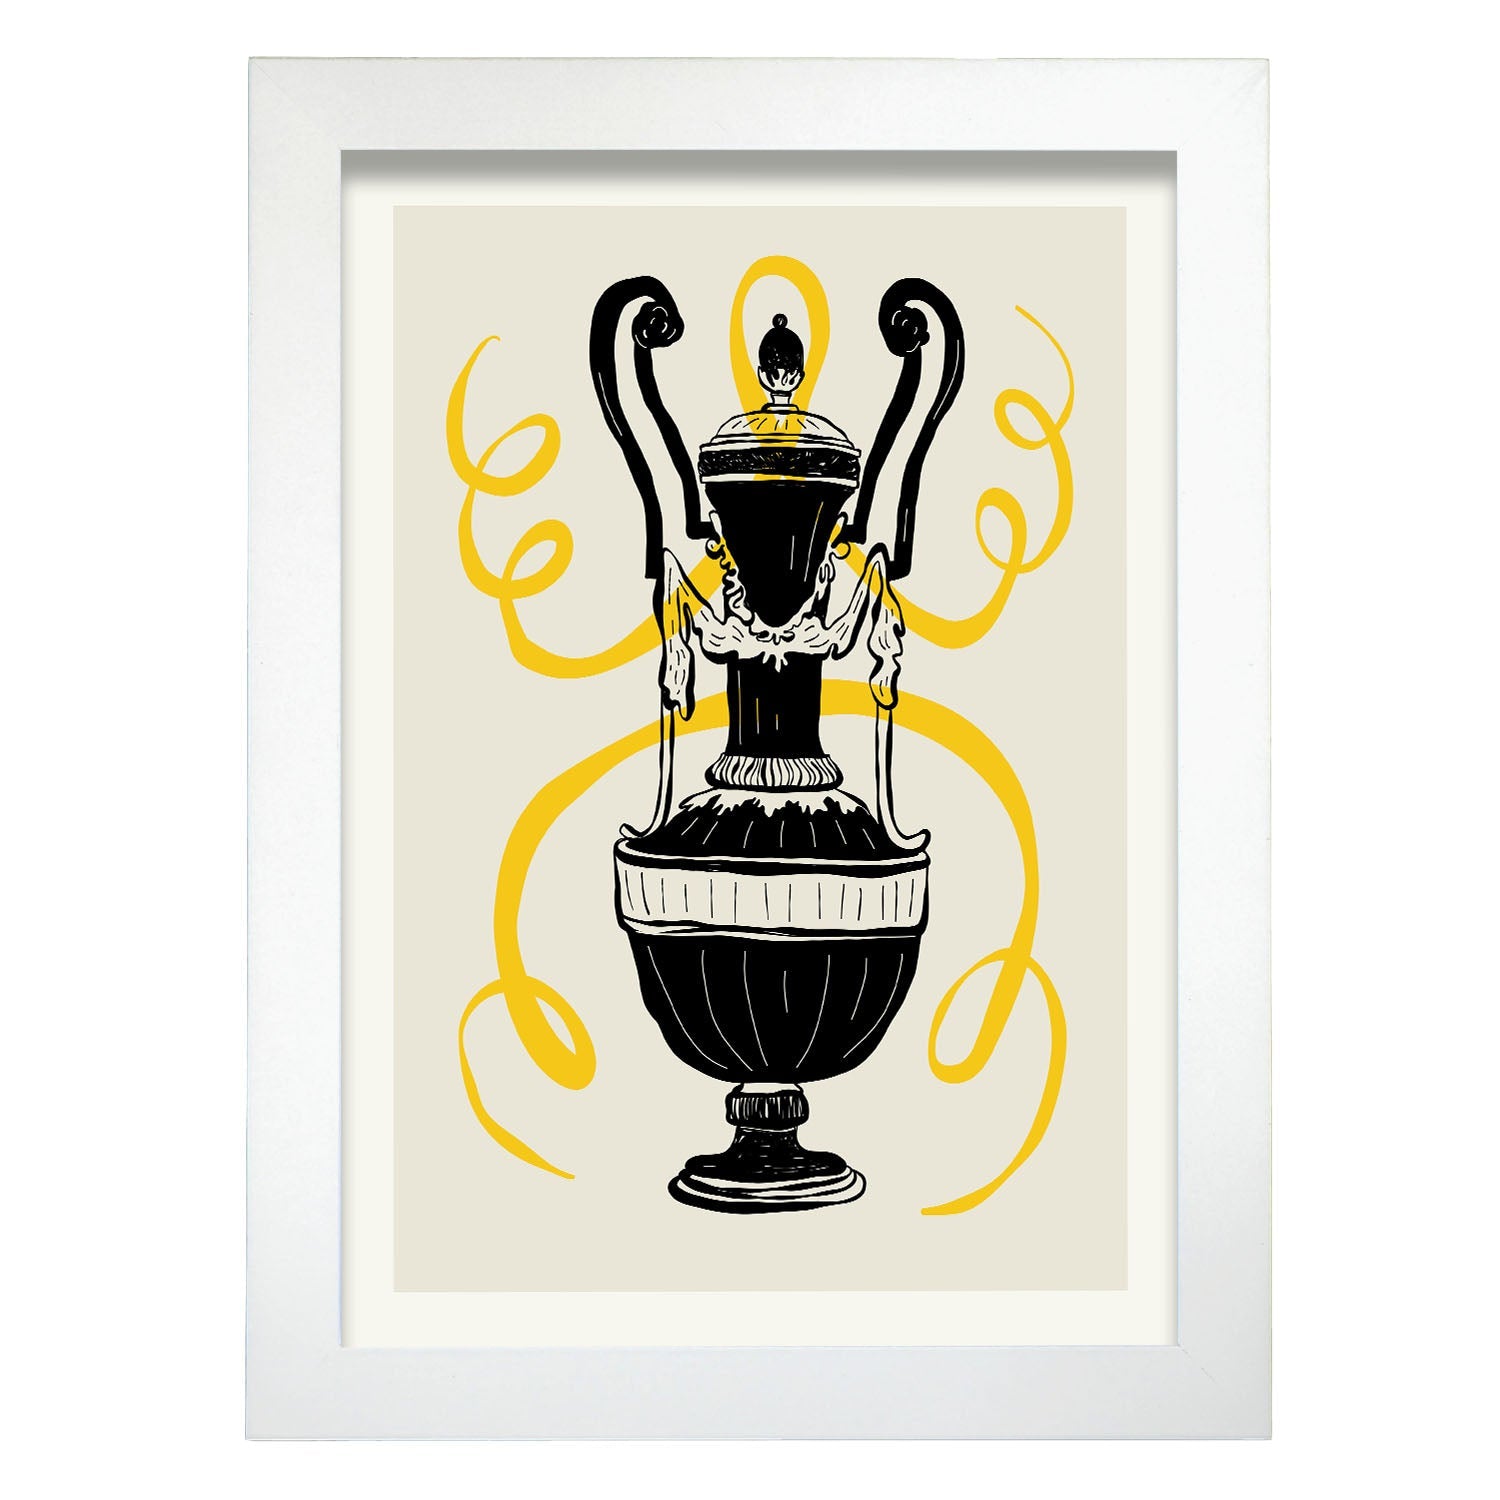 Acient Greek Vase-Artwork-Nacnic-A4-Marco Blanco-Nacnic Estudio SL